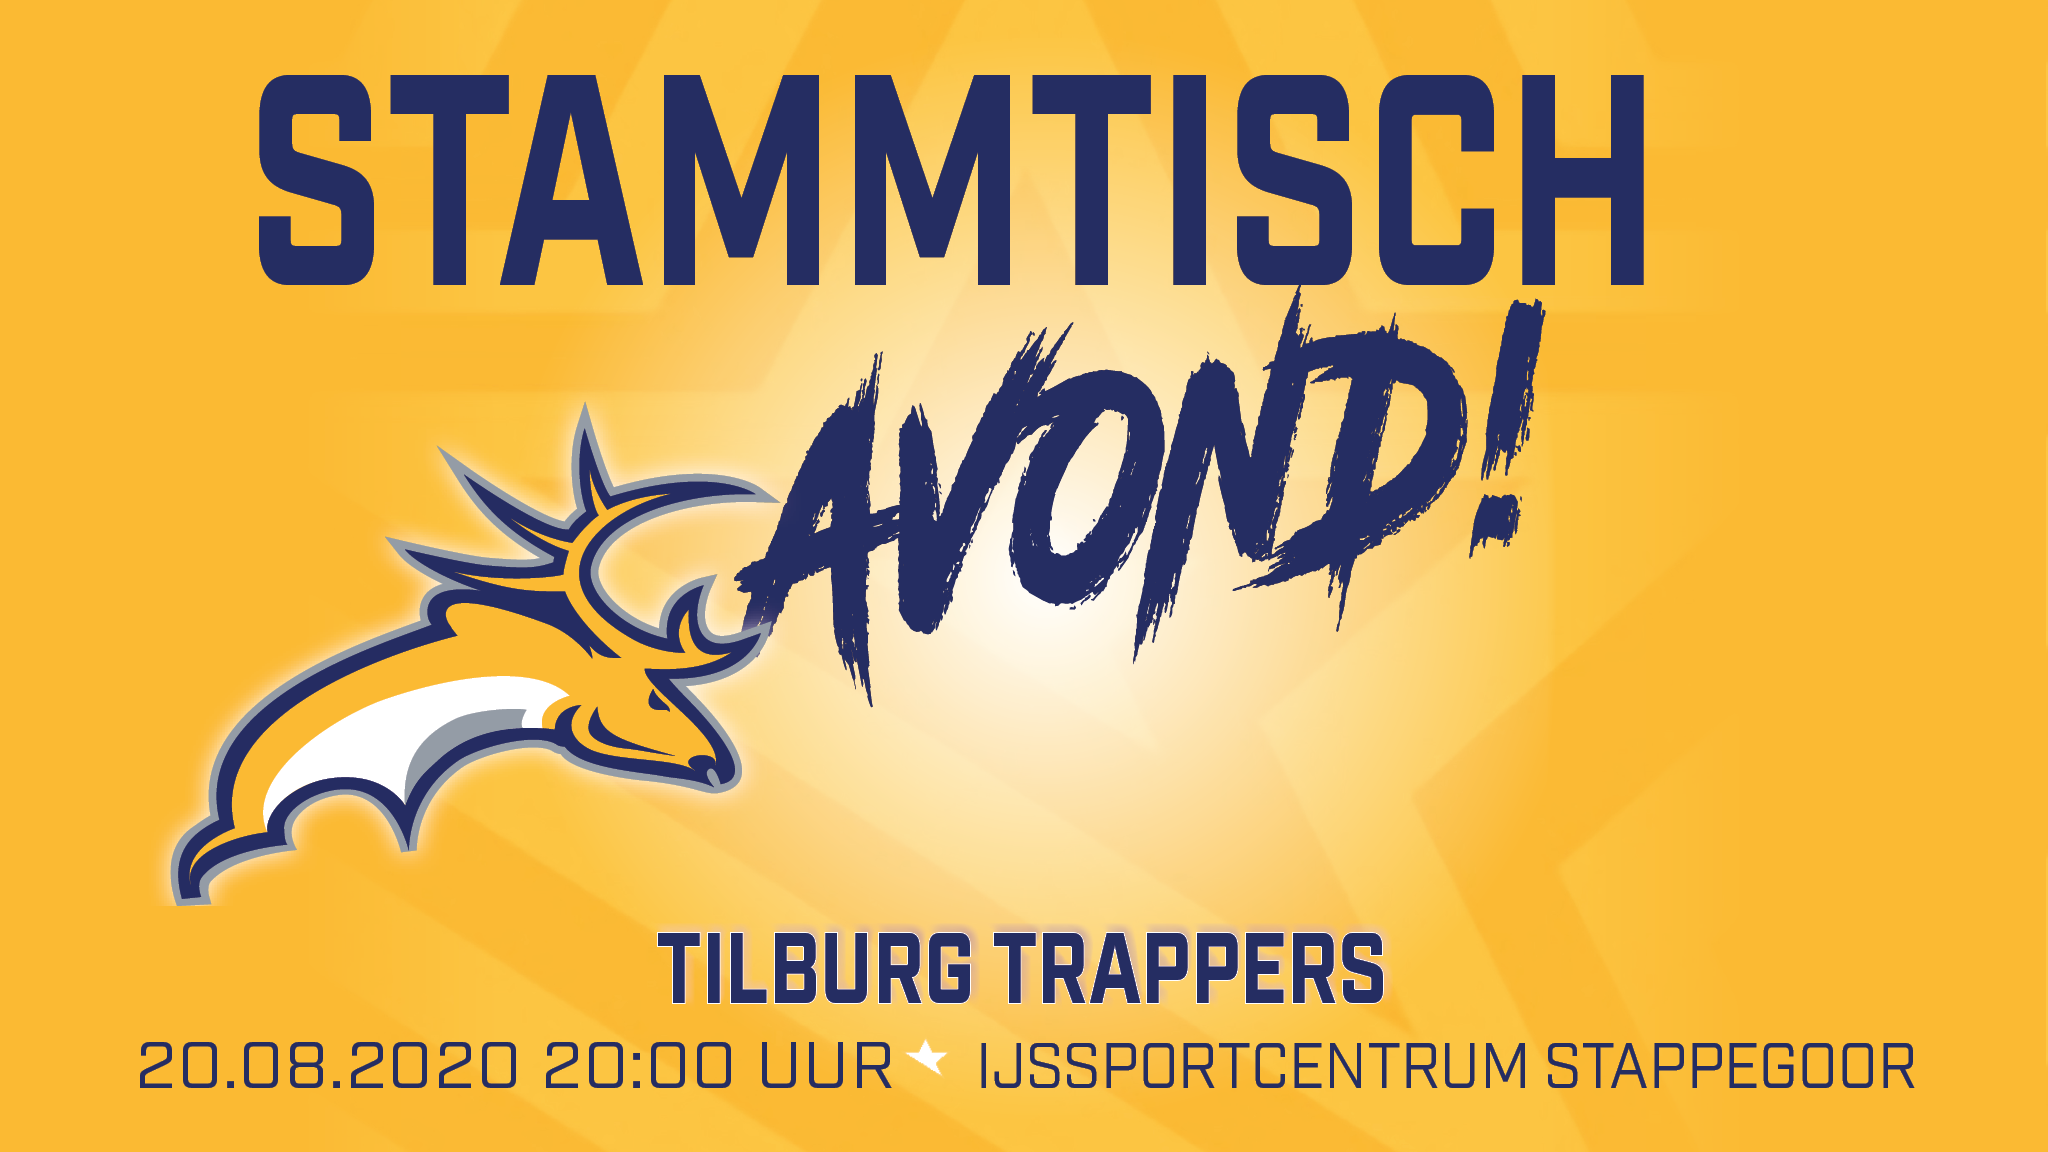 Verslag eerste Online Stammtisch avond Tilburg Trappers